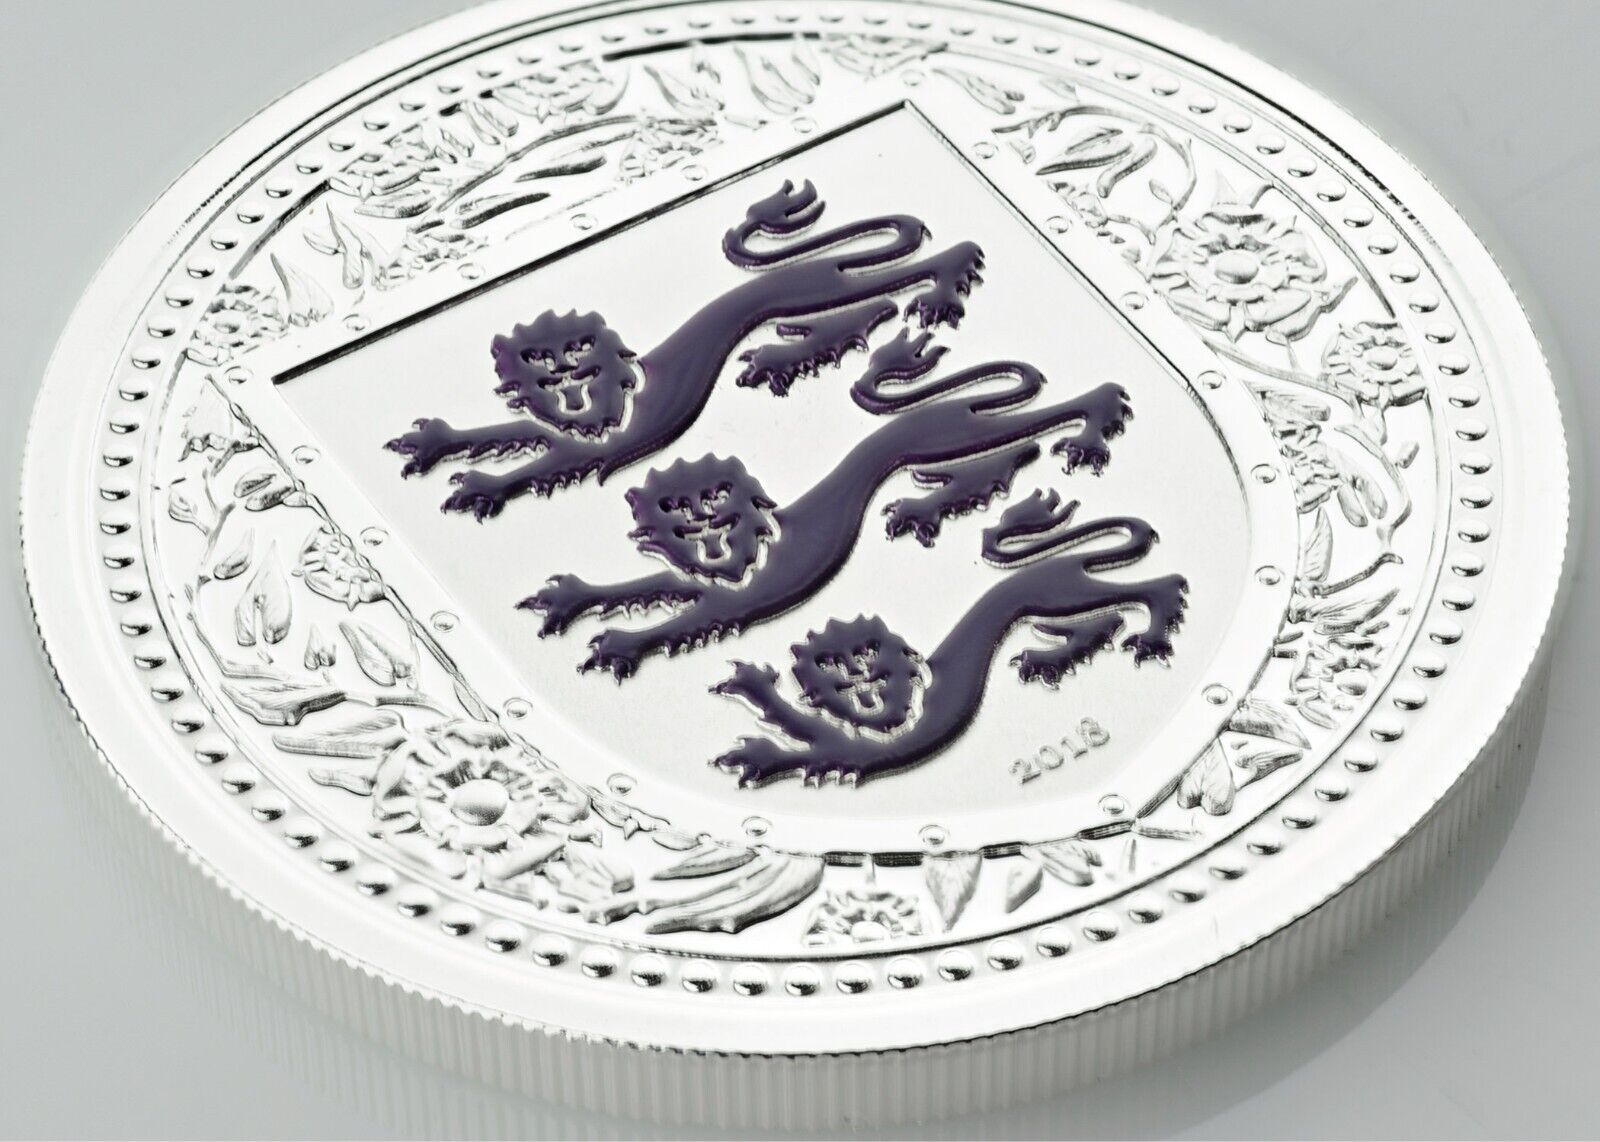 1 Oz Silver Coin 2018 Gibraltar £2 Royal Arms of England Color Proof - Purple-classypw.com-1